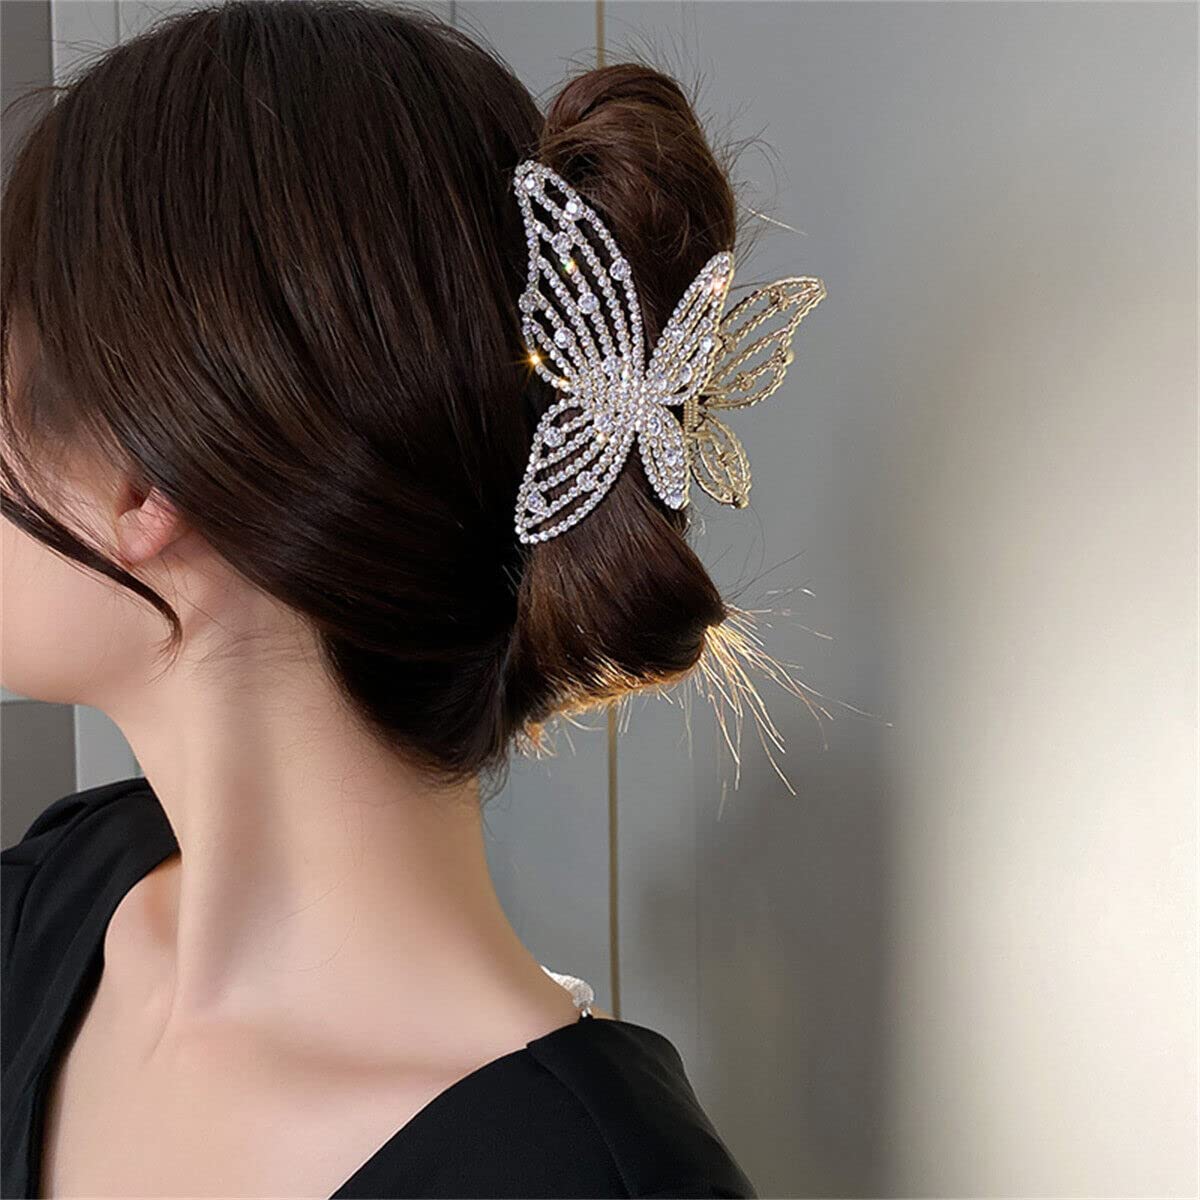 rubela store golden butterfly clutcher hair accessory for women and girls kids 293